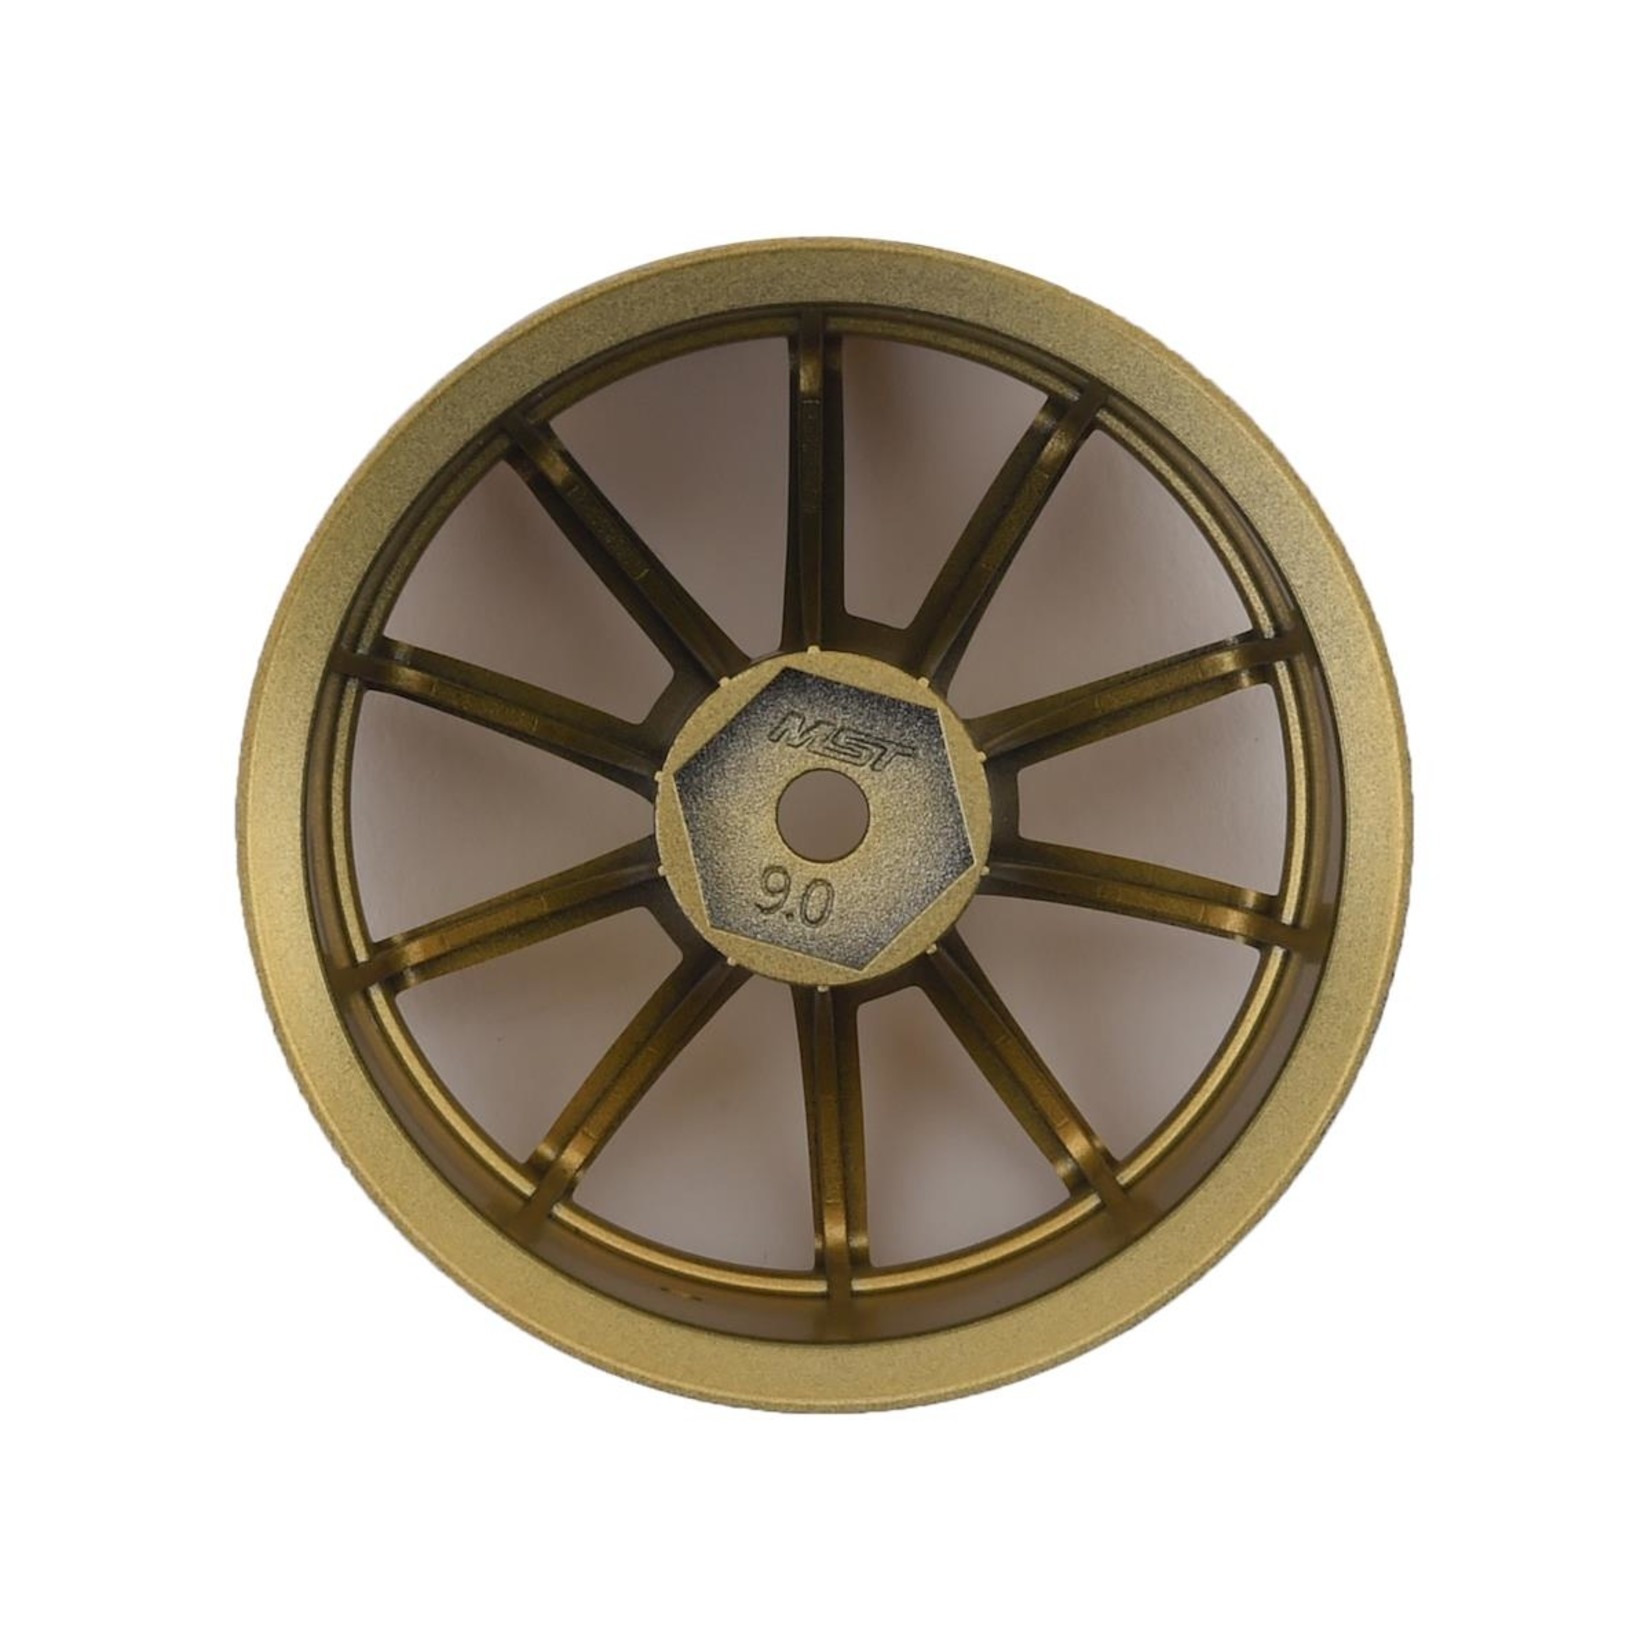 MST MST GTR Wheel Set (Gold) (4) (9mm Offset) w/12mm Hex #832068GD